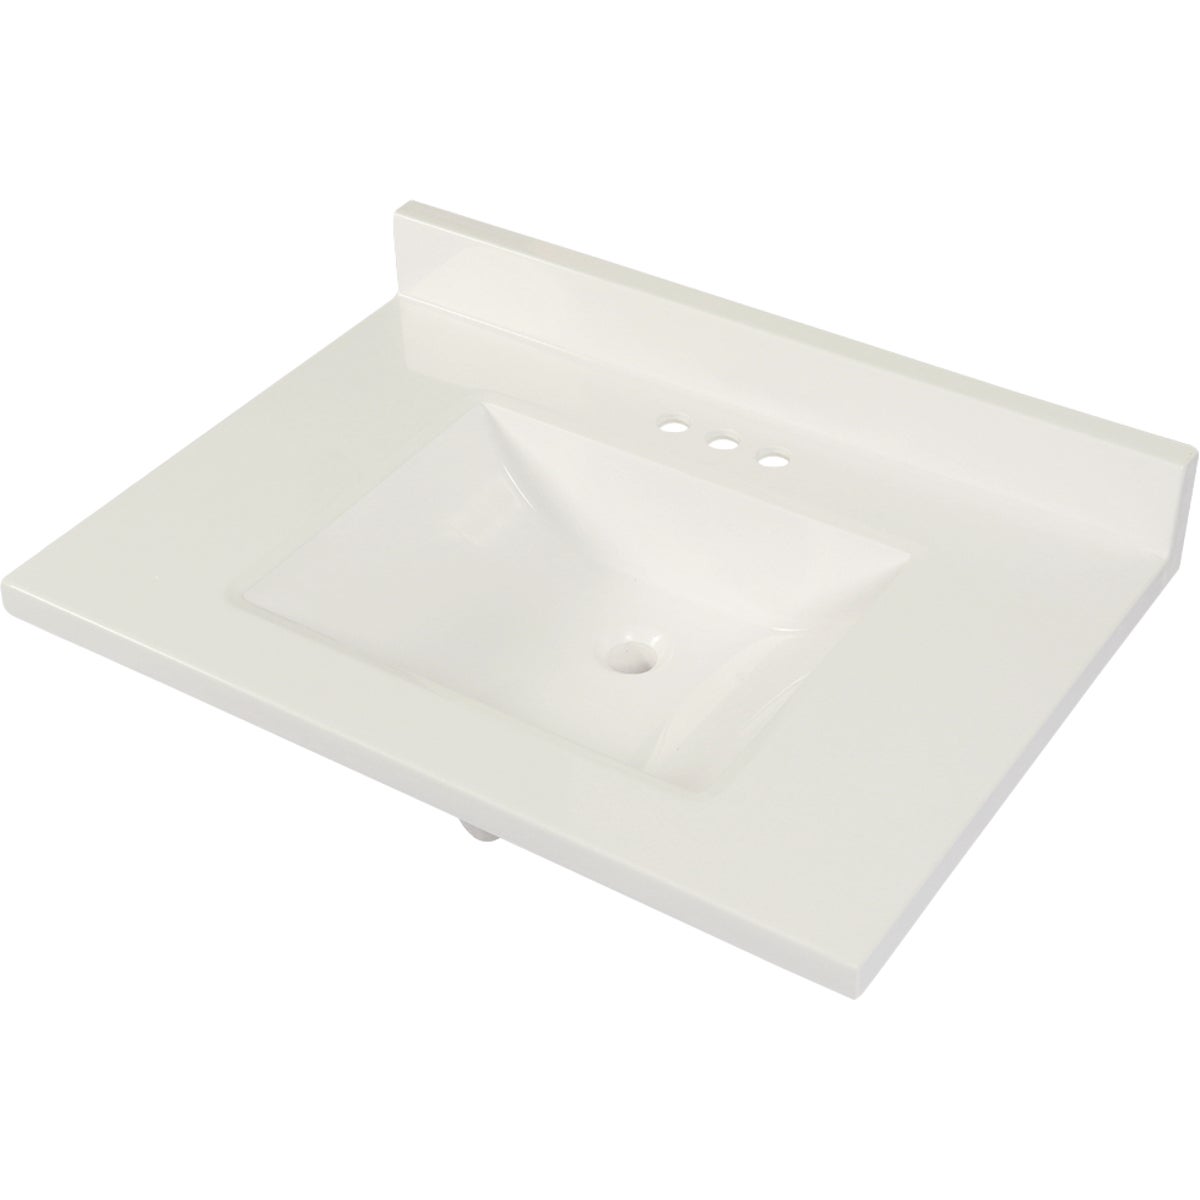 Item 282738, Vanity top with cultured marble, integral rectangular wave sink, pre-